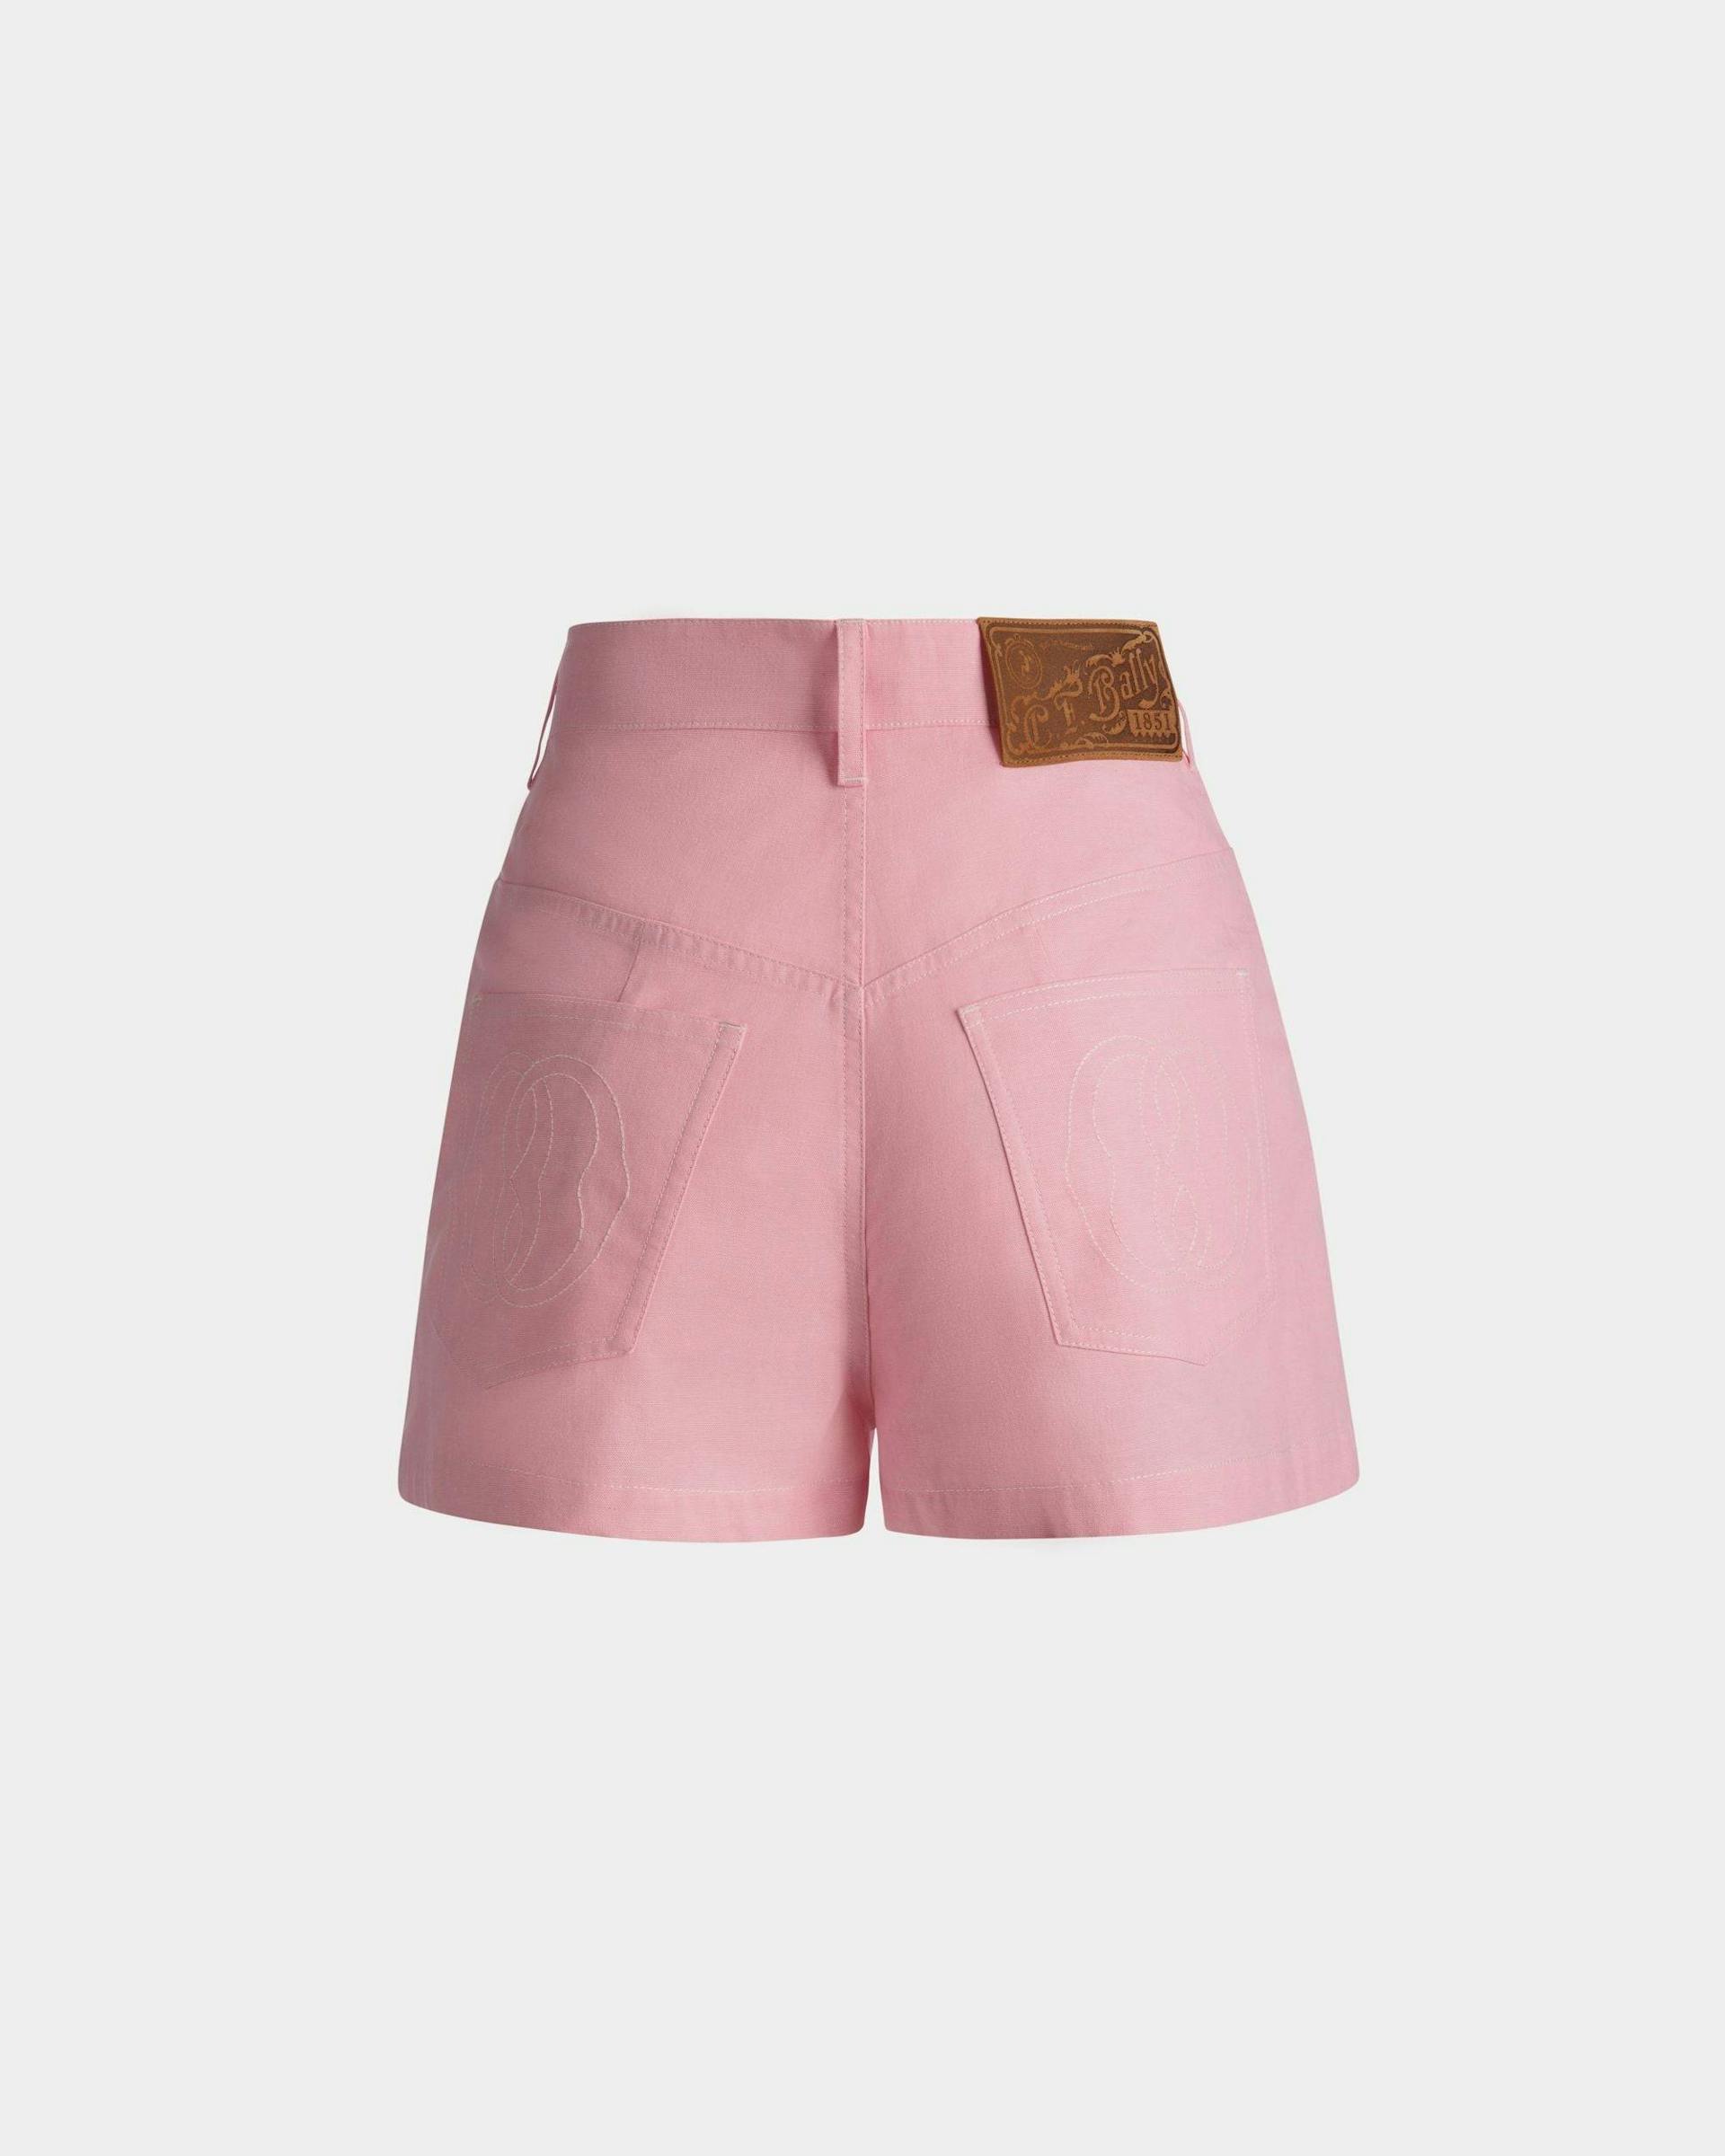 Women's Shorts in Pink Cotton Denim | Bally | Still Life Back